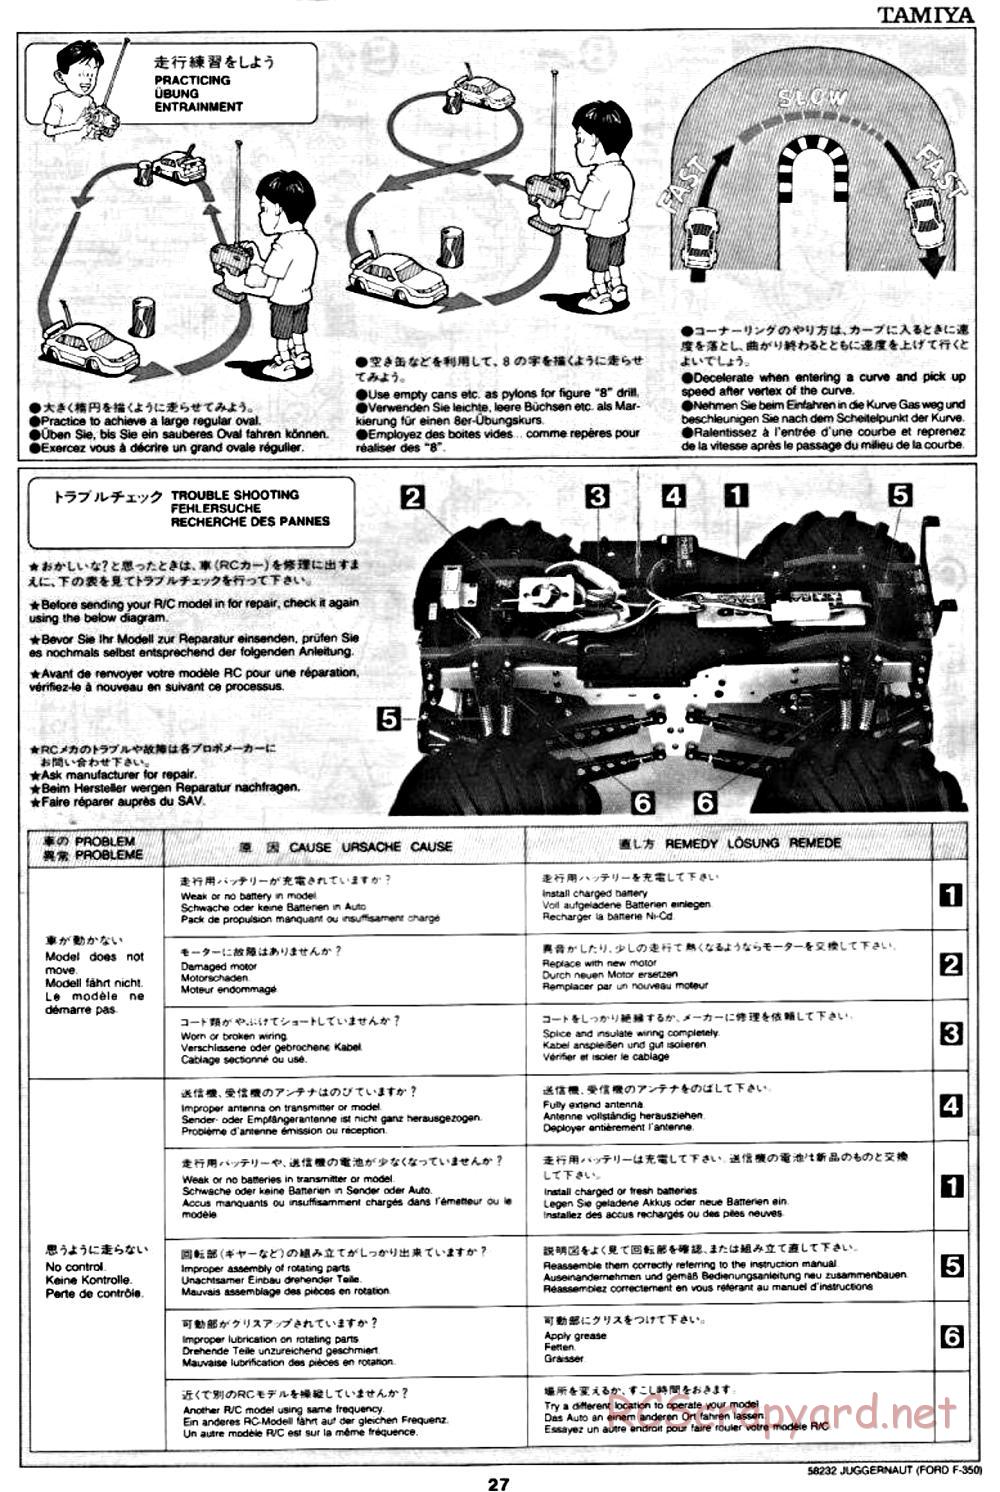 Tamiya - Juggernaut Chassis - Manual - Page 27